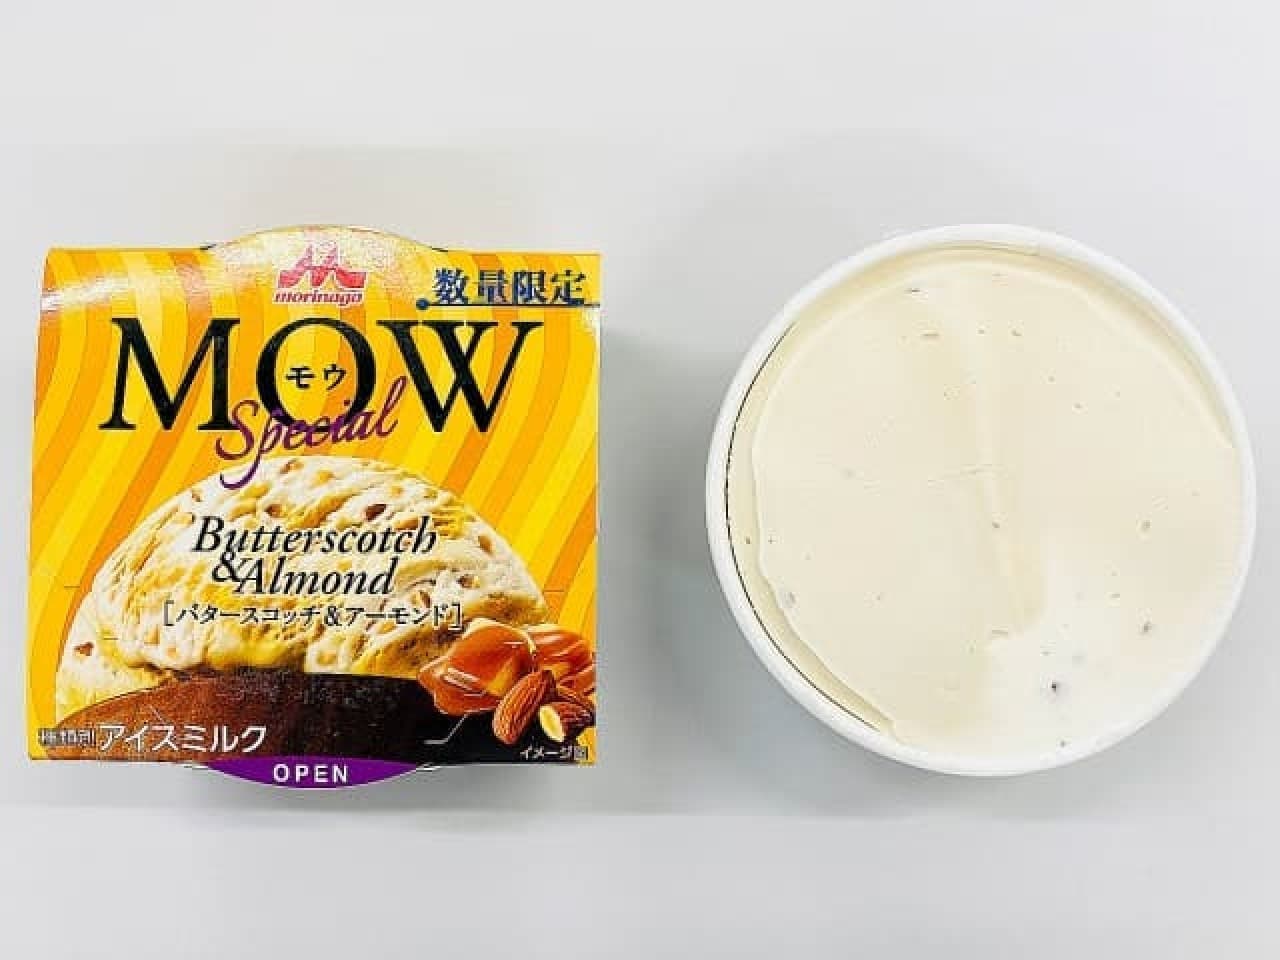 7-ELEVEN "Morinaga Moo Special Butterscotch & Almond